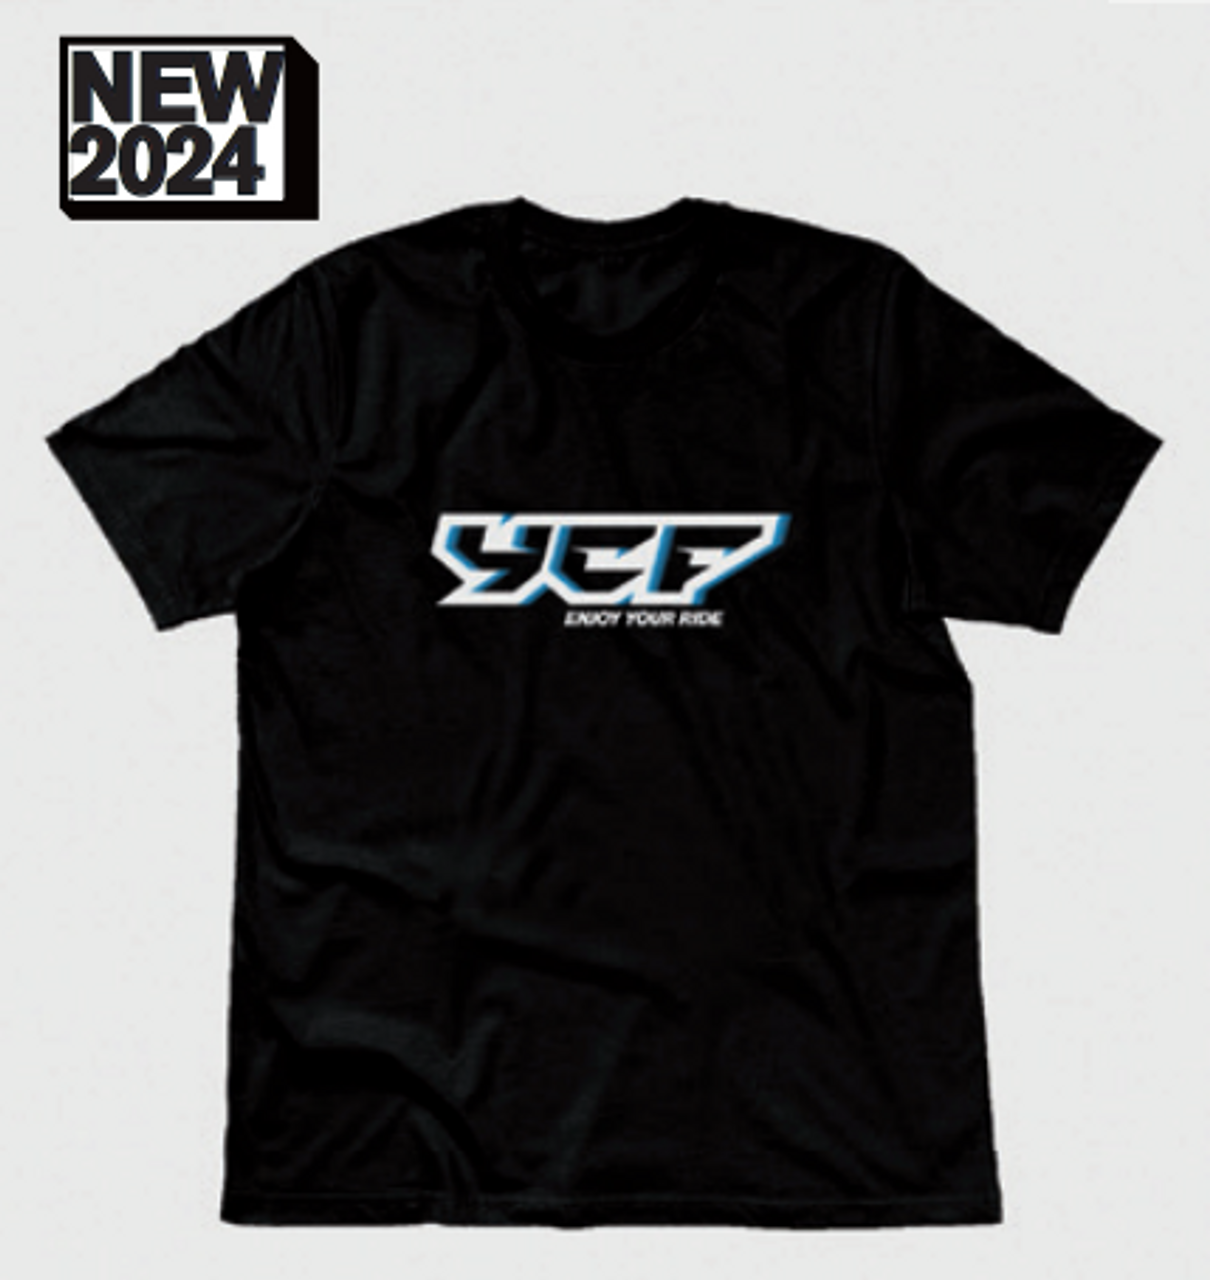 YCF T-SHIRT BLACK - XL